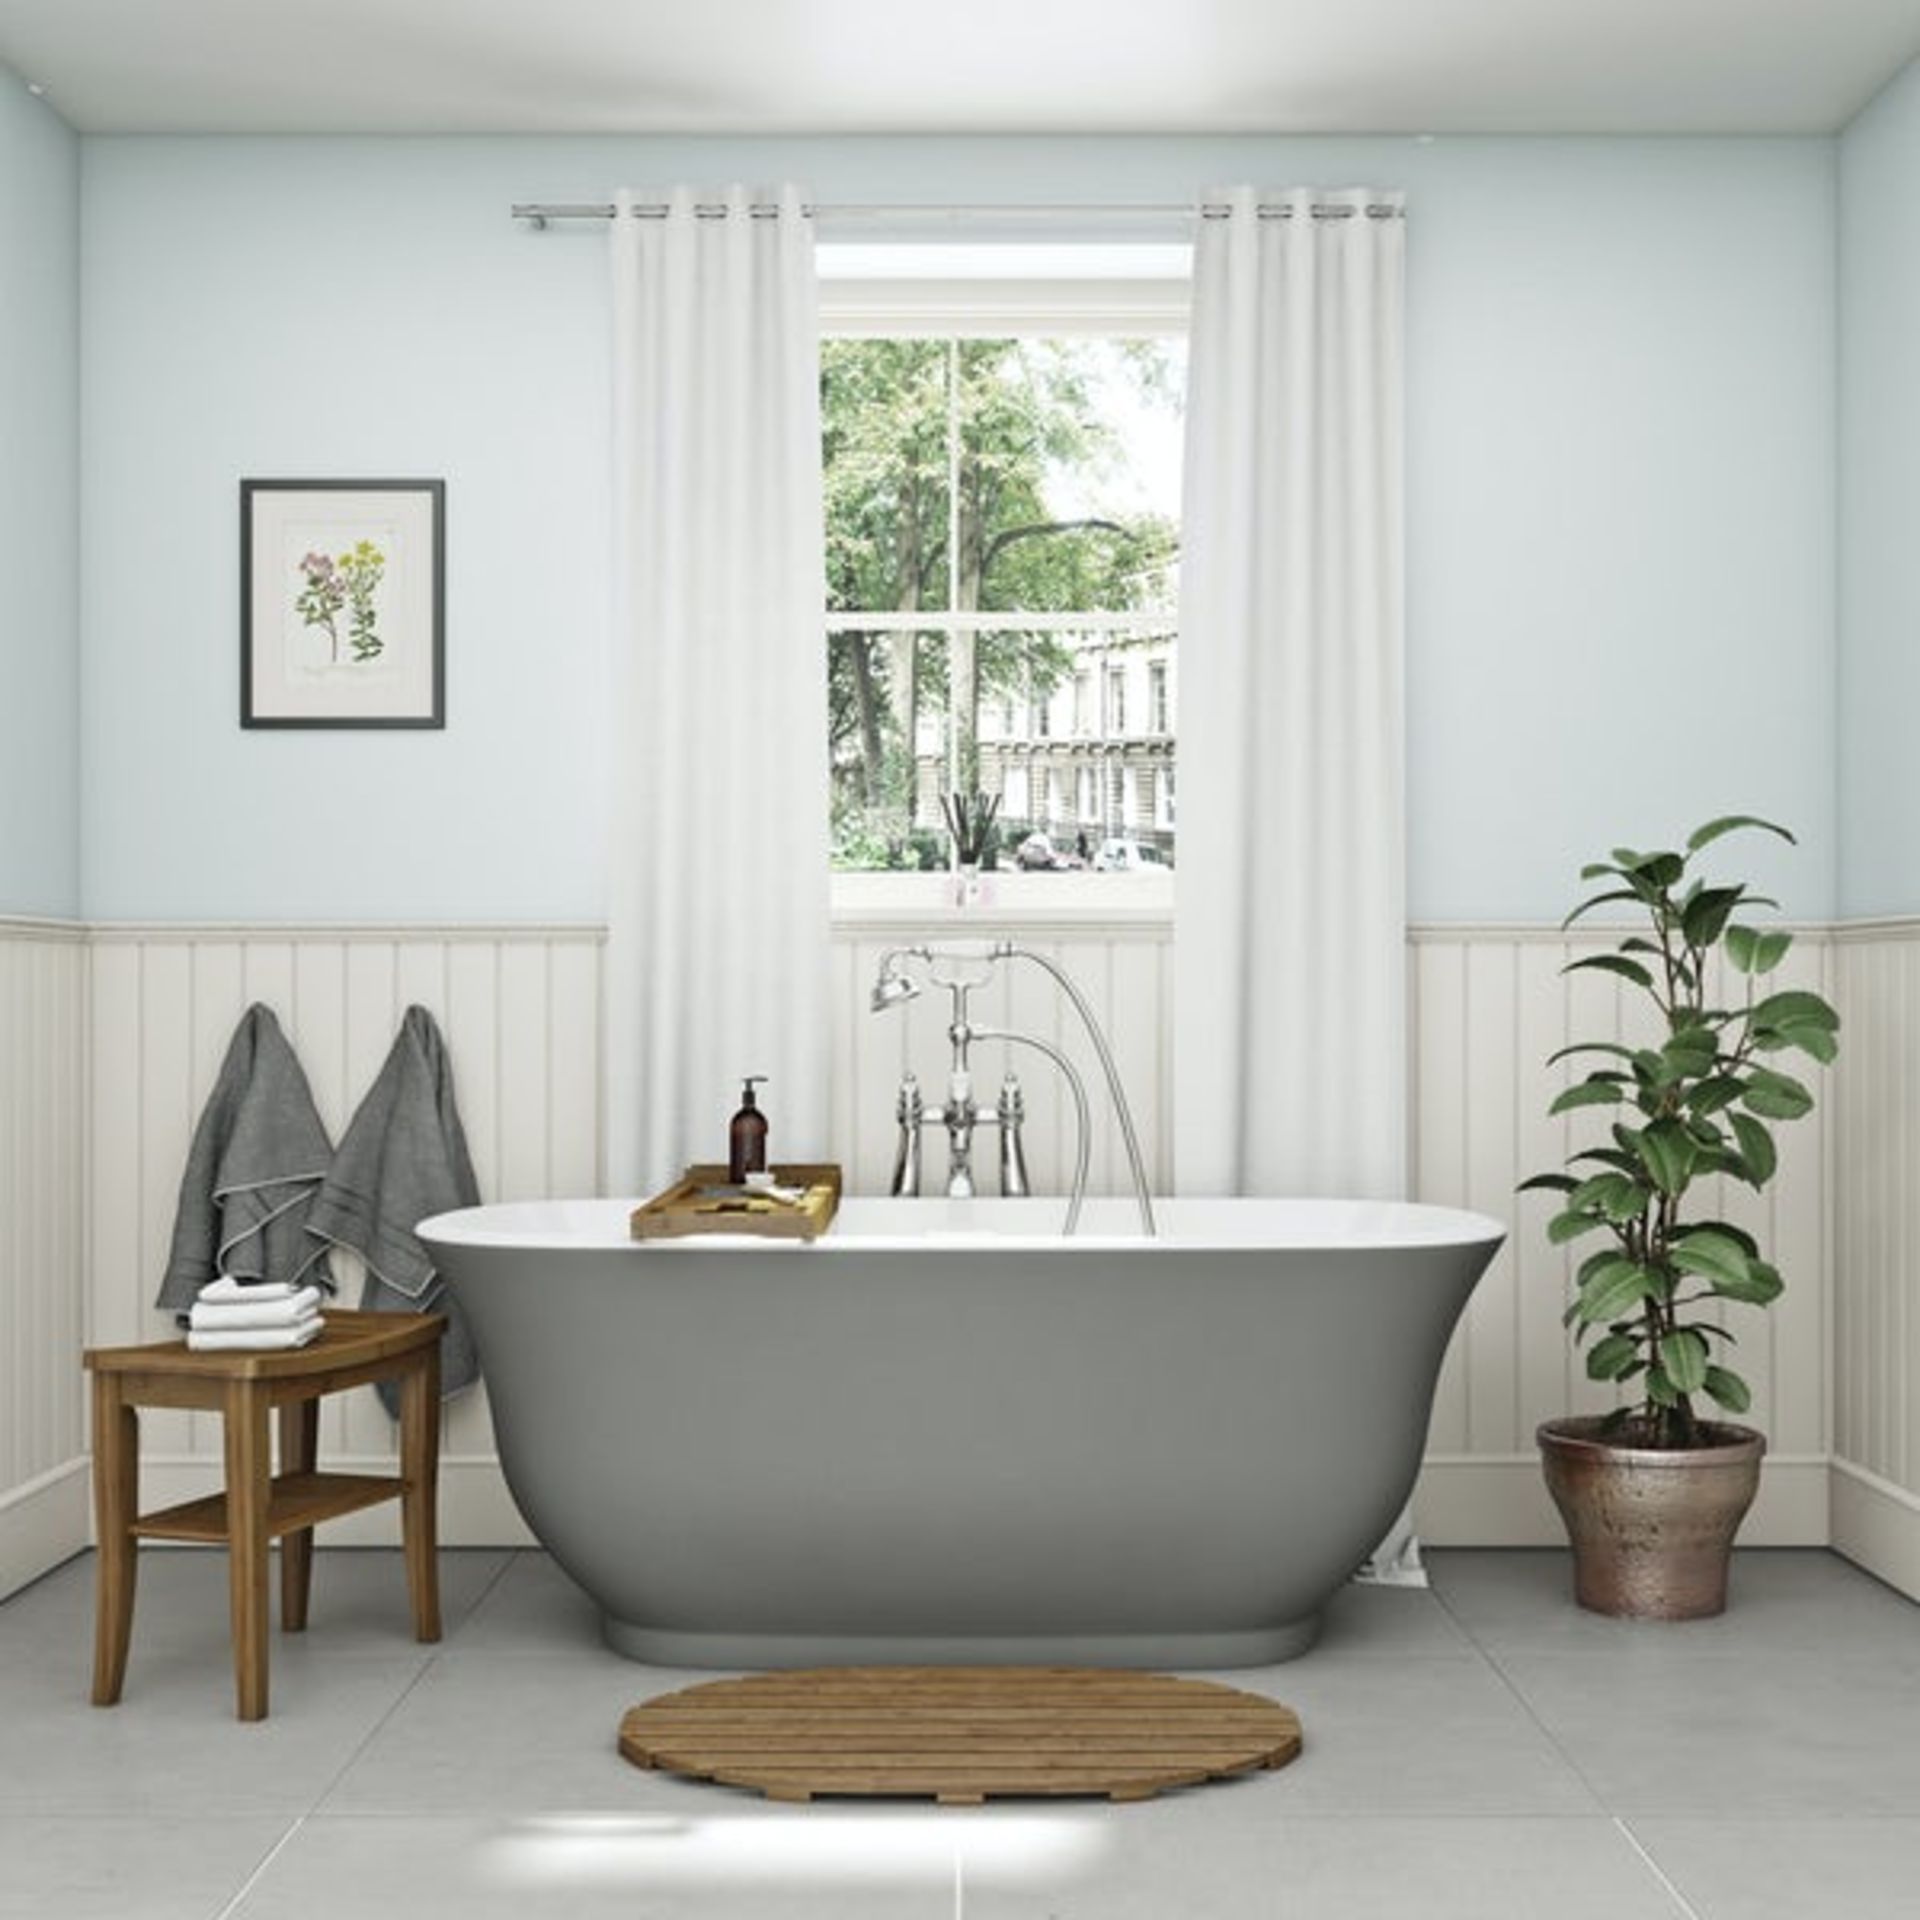 RRP £700. The Bath Company 1500 x 720mm Grey designer freestanding bath.